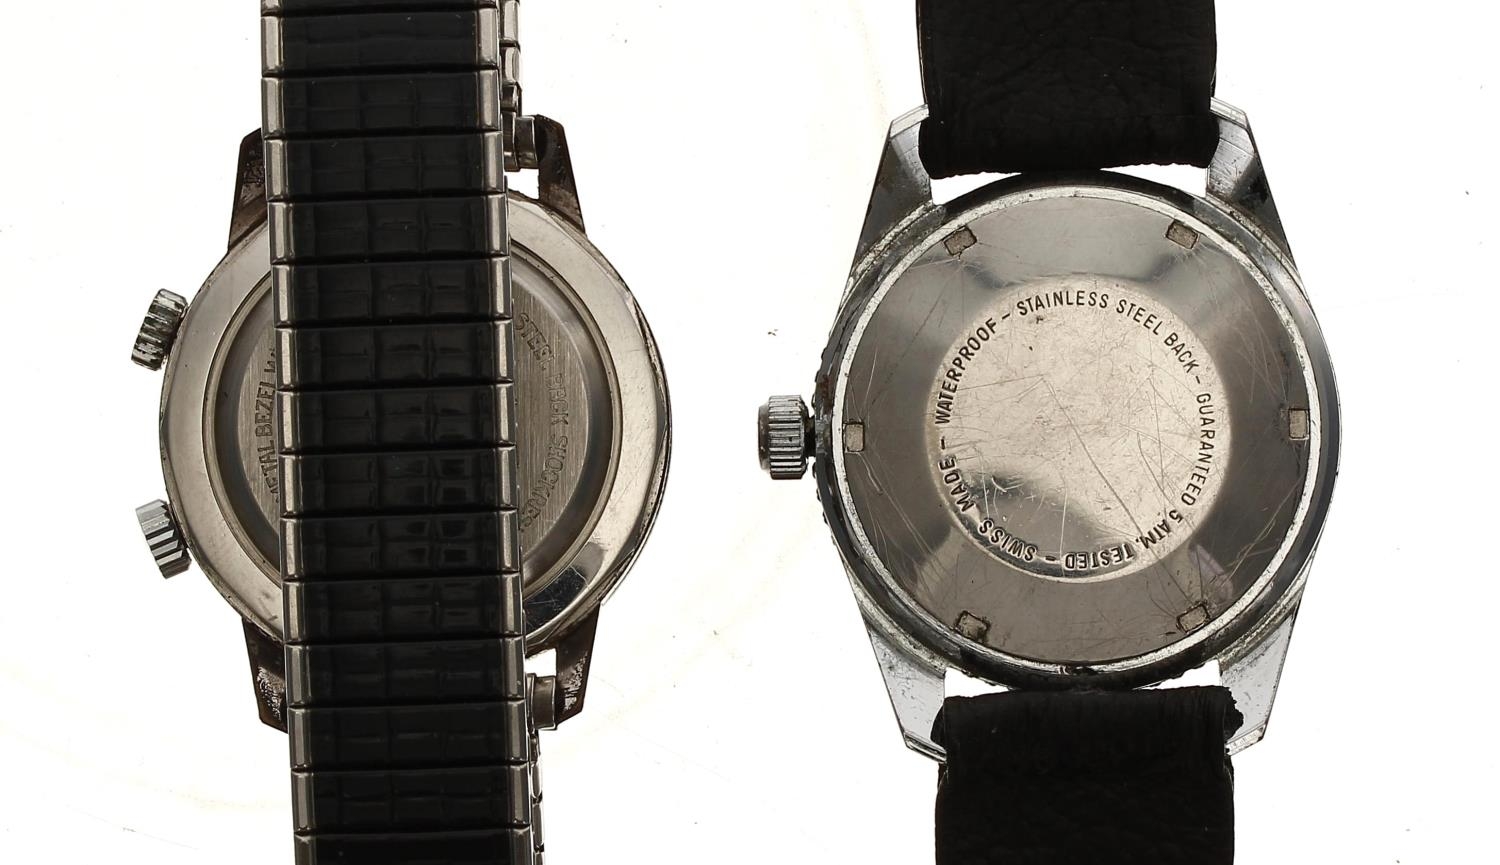 Corvette alarm nickel and stainless steel gentleman's wristwatch, later expanding bracelet, 34mm; - Image 2 of 2